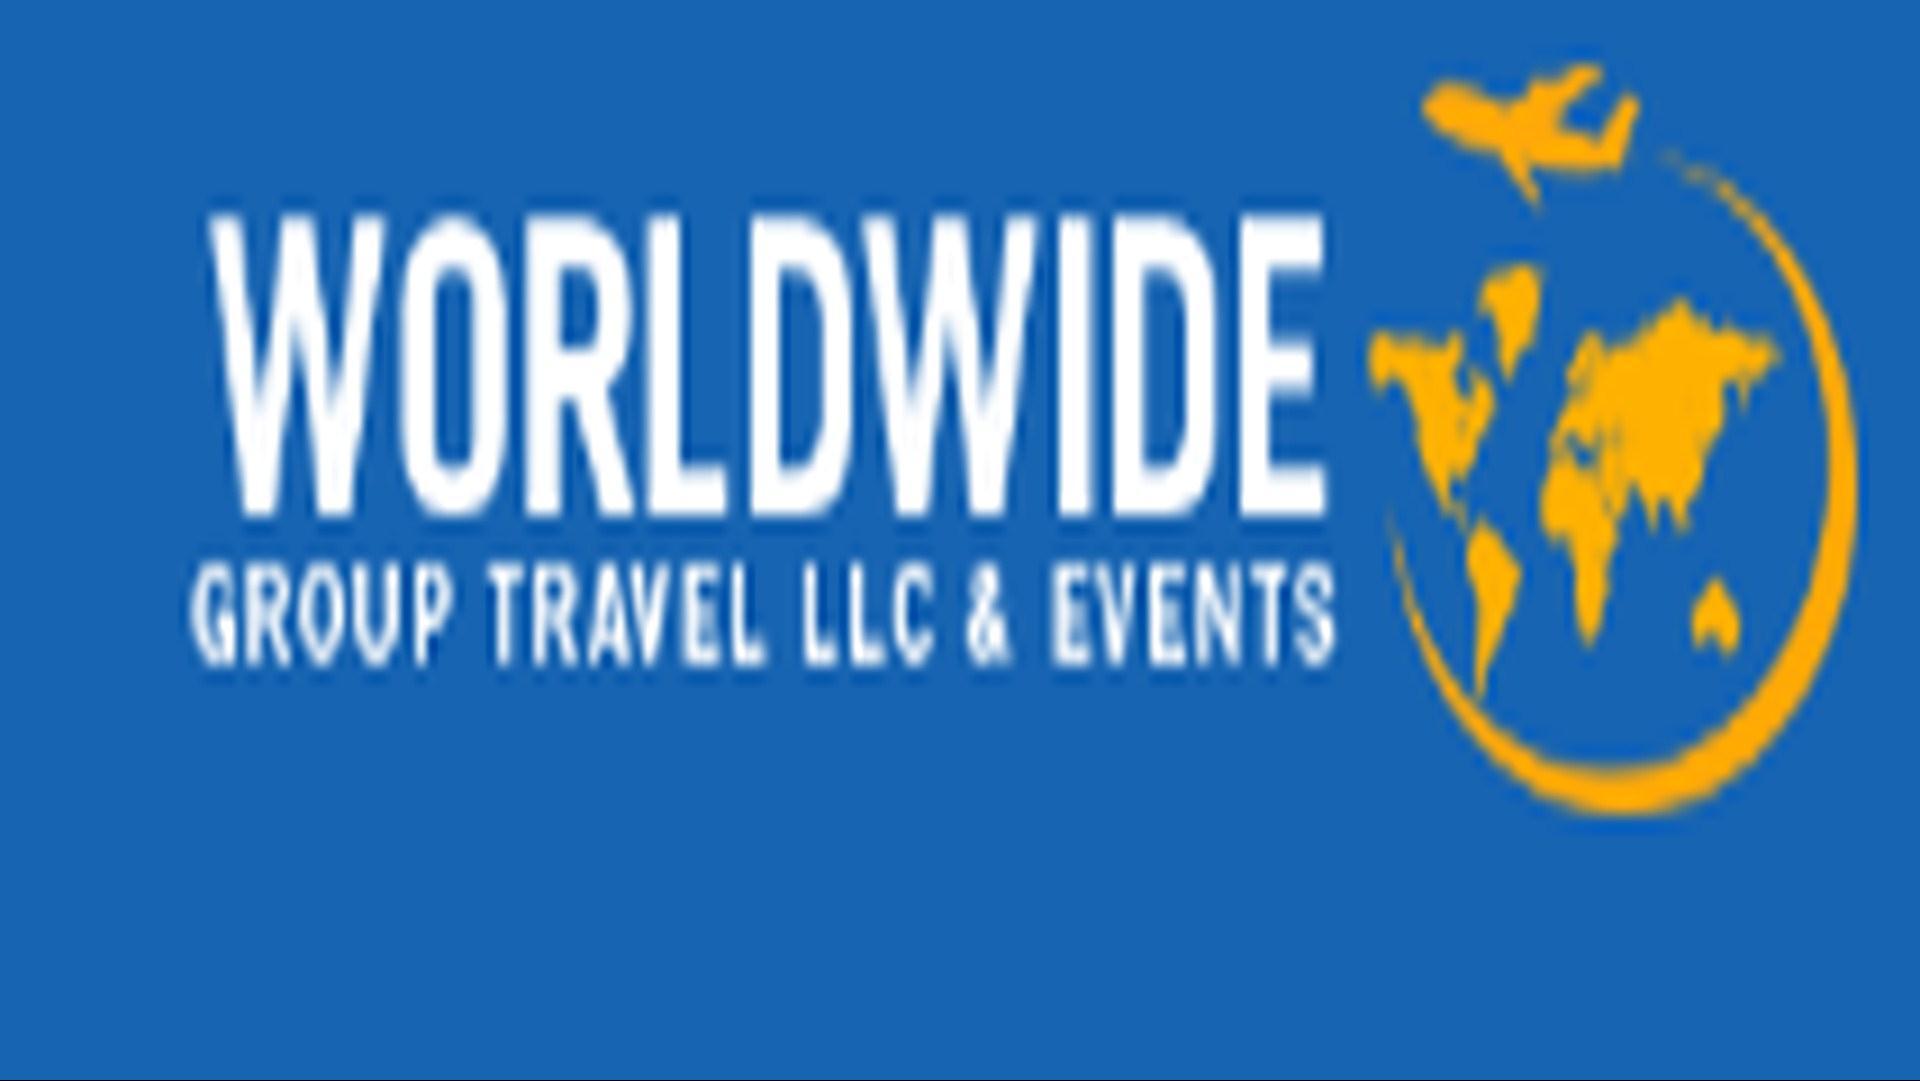 Worldwide Group Travel, LLC in Mt. Sanai, NY